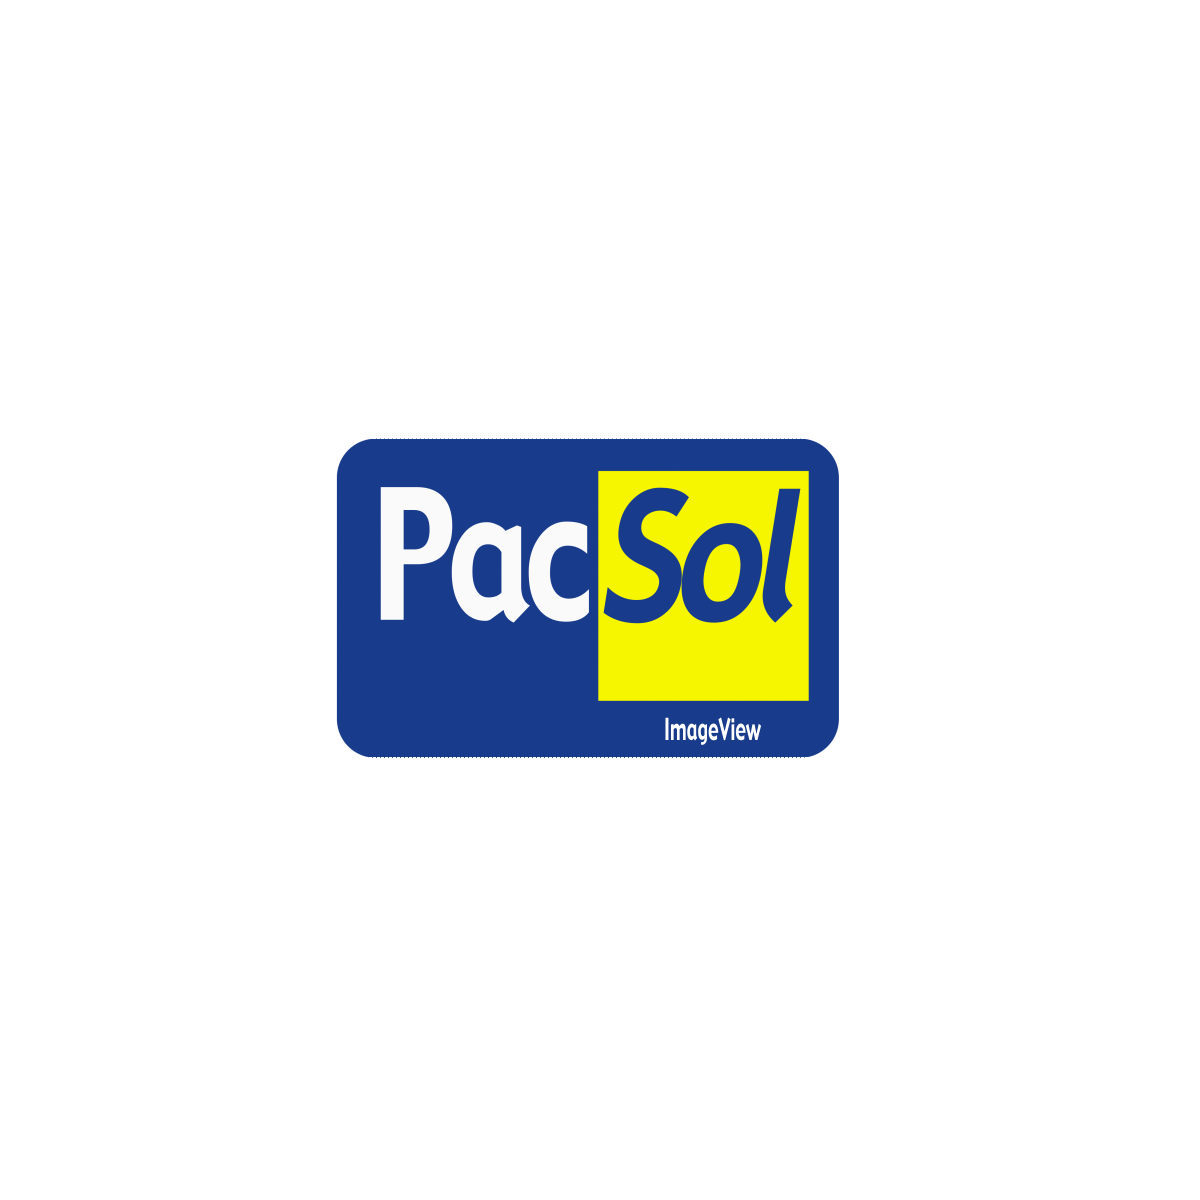 PacSol_ImageView_SquareBorder_ImageGallery384dpi-1